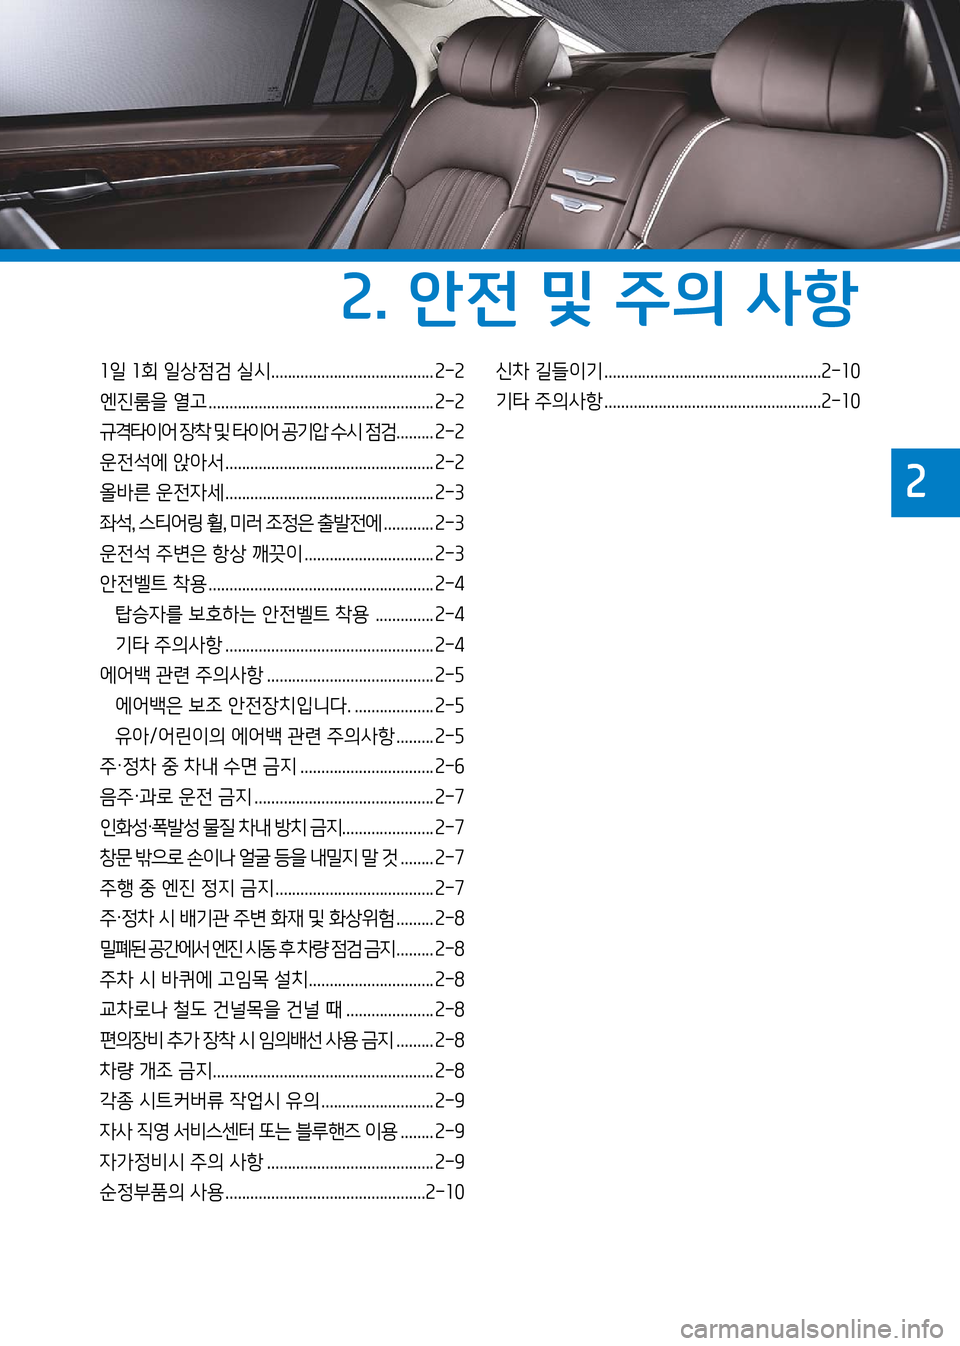 Hyundai Genesis 2016  EQ900 HI - 사용 설명서 (in Korean) 1일 1회 일상점검 실시....................................... 2-2
엔진룸을 열고 ...................................................... 2-2
규격타이어 장착 및 타이어 공기압 �